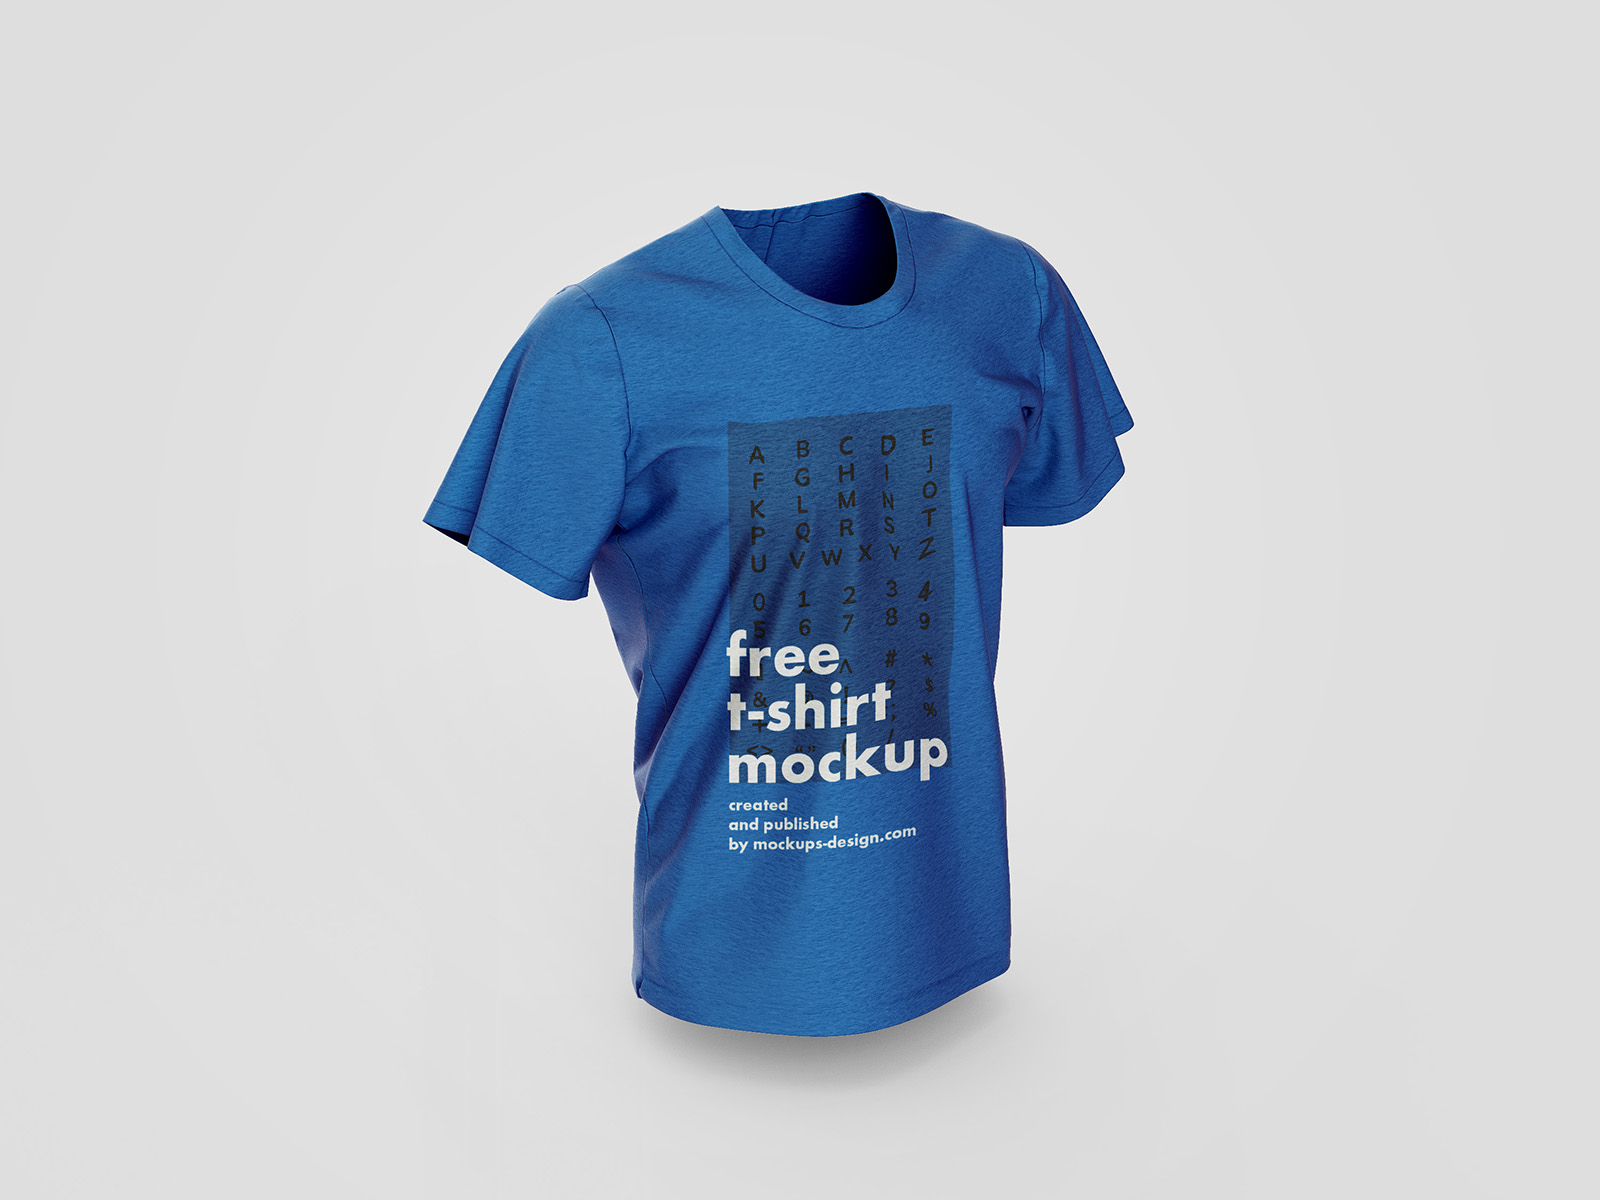 Free t-shirt mockup